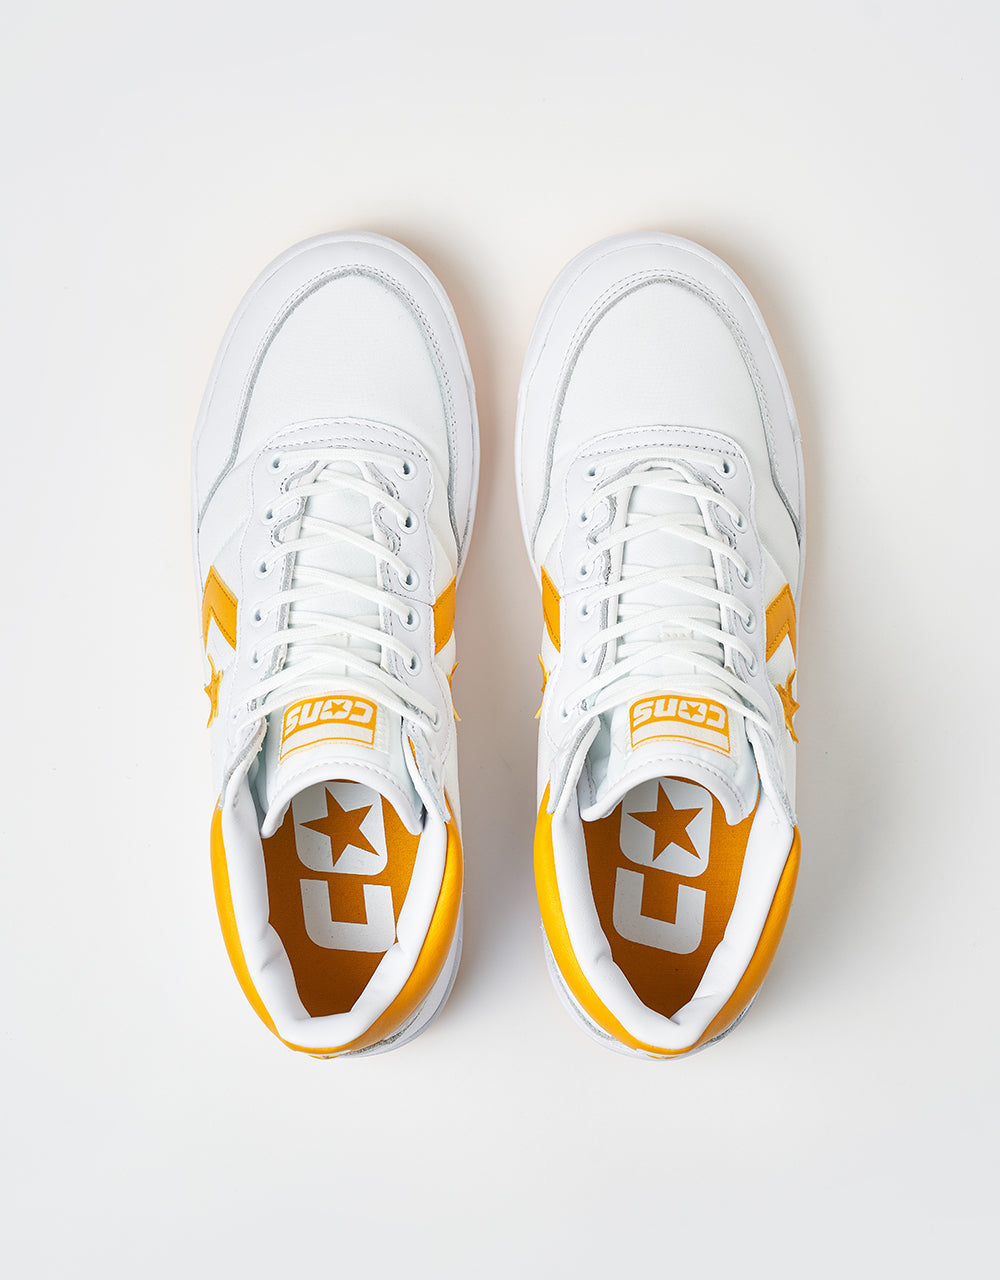 Converse Fastbreak Pro Skate Shoes - White/Light Yellow/White